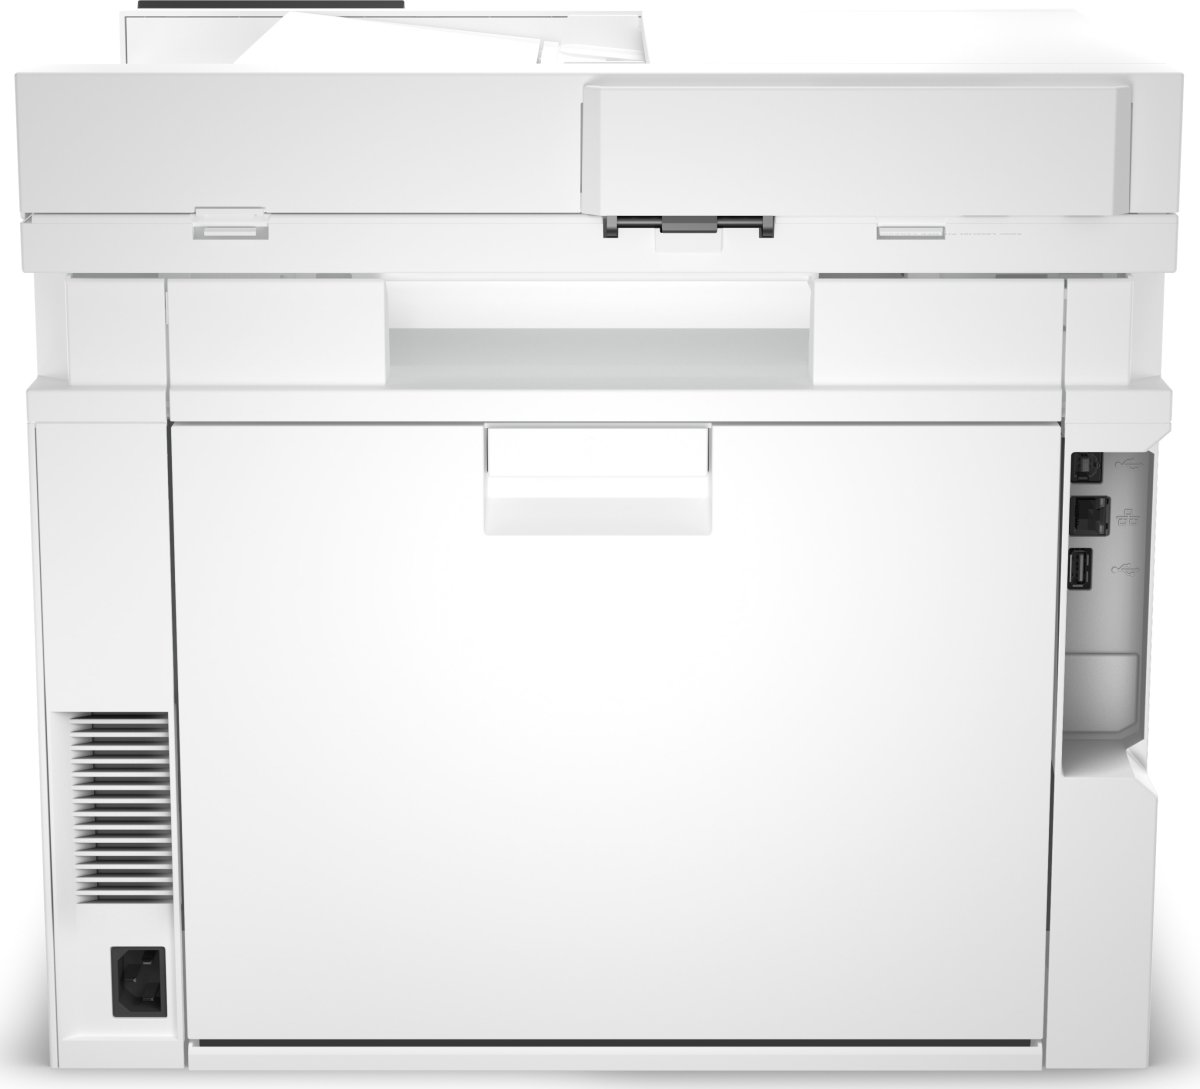 HP Color LaserJet Pro 4302dw A4 farve laserprinter